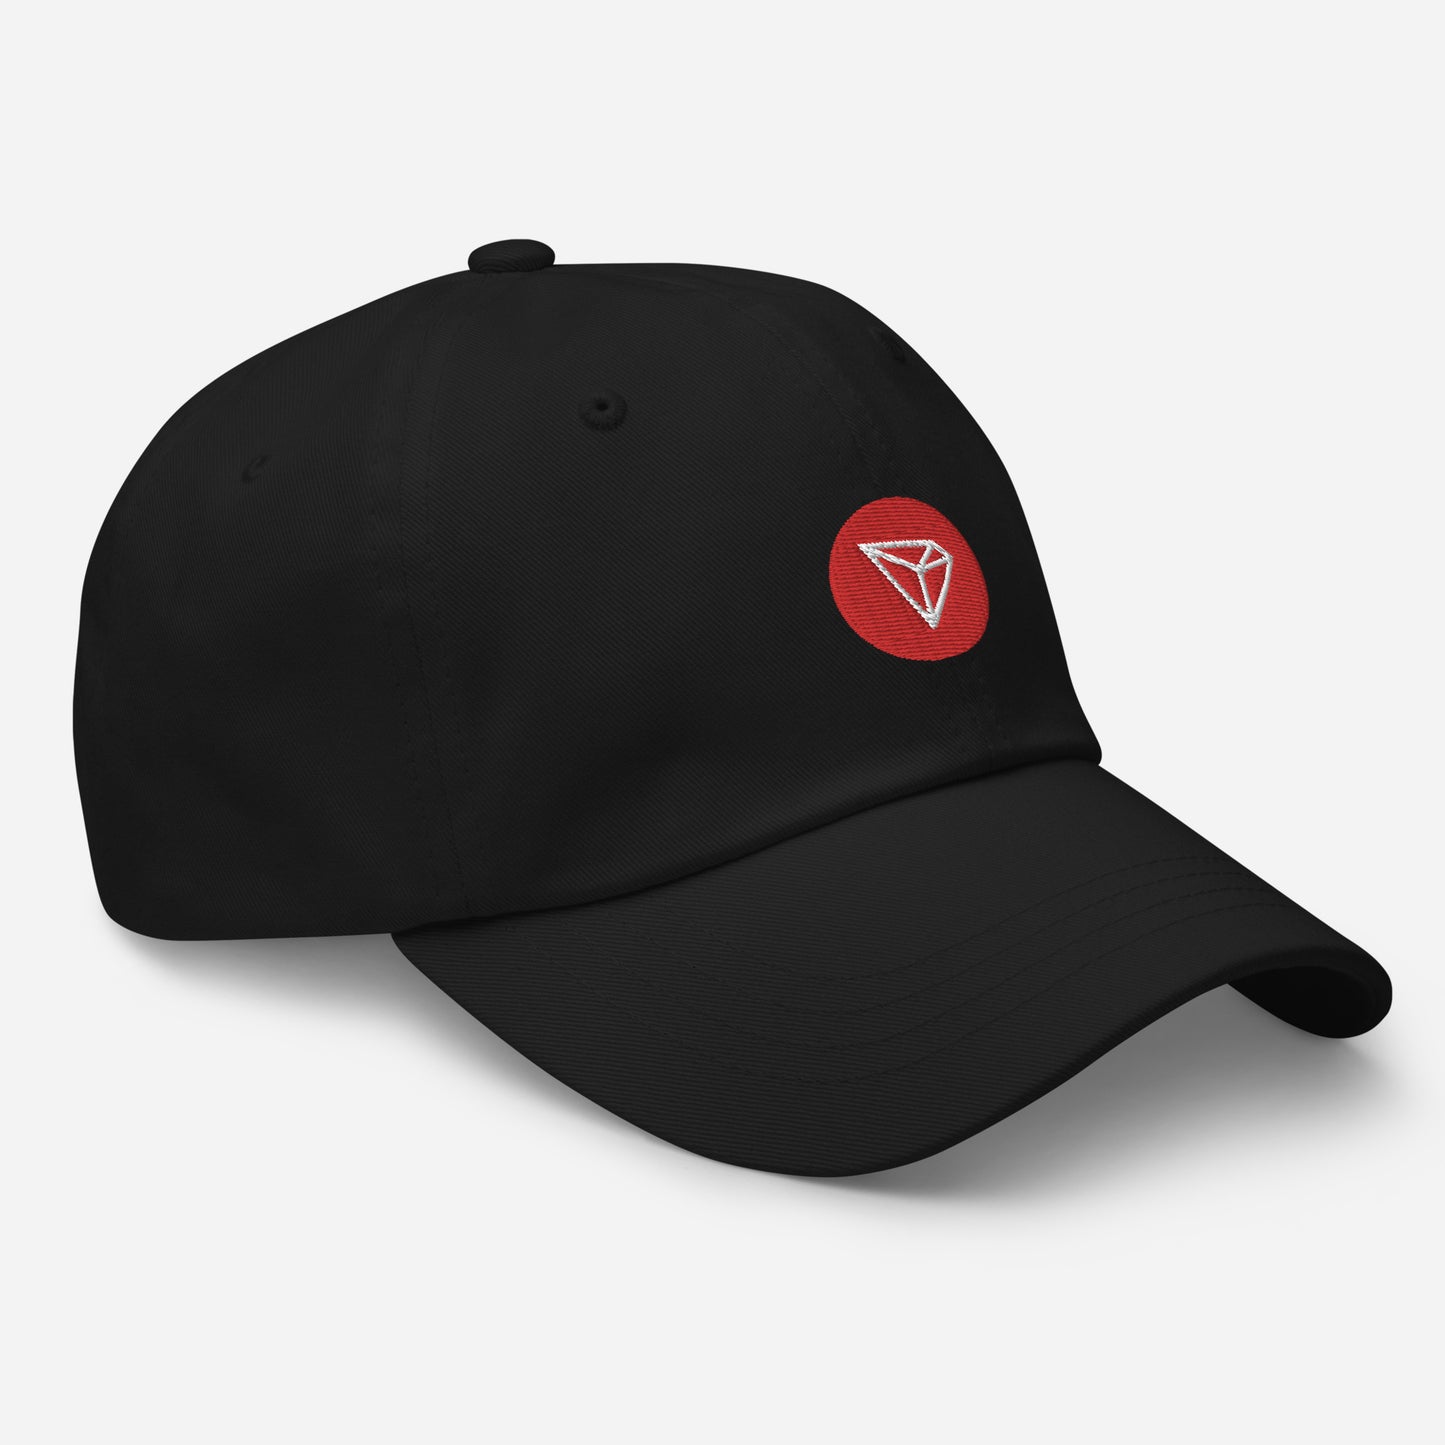 TRON (TRX) - Fitted baseball cap